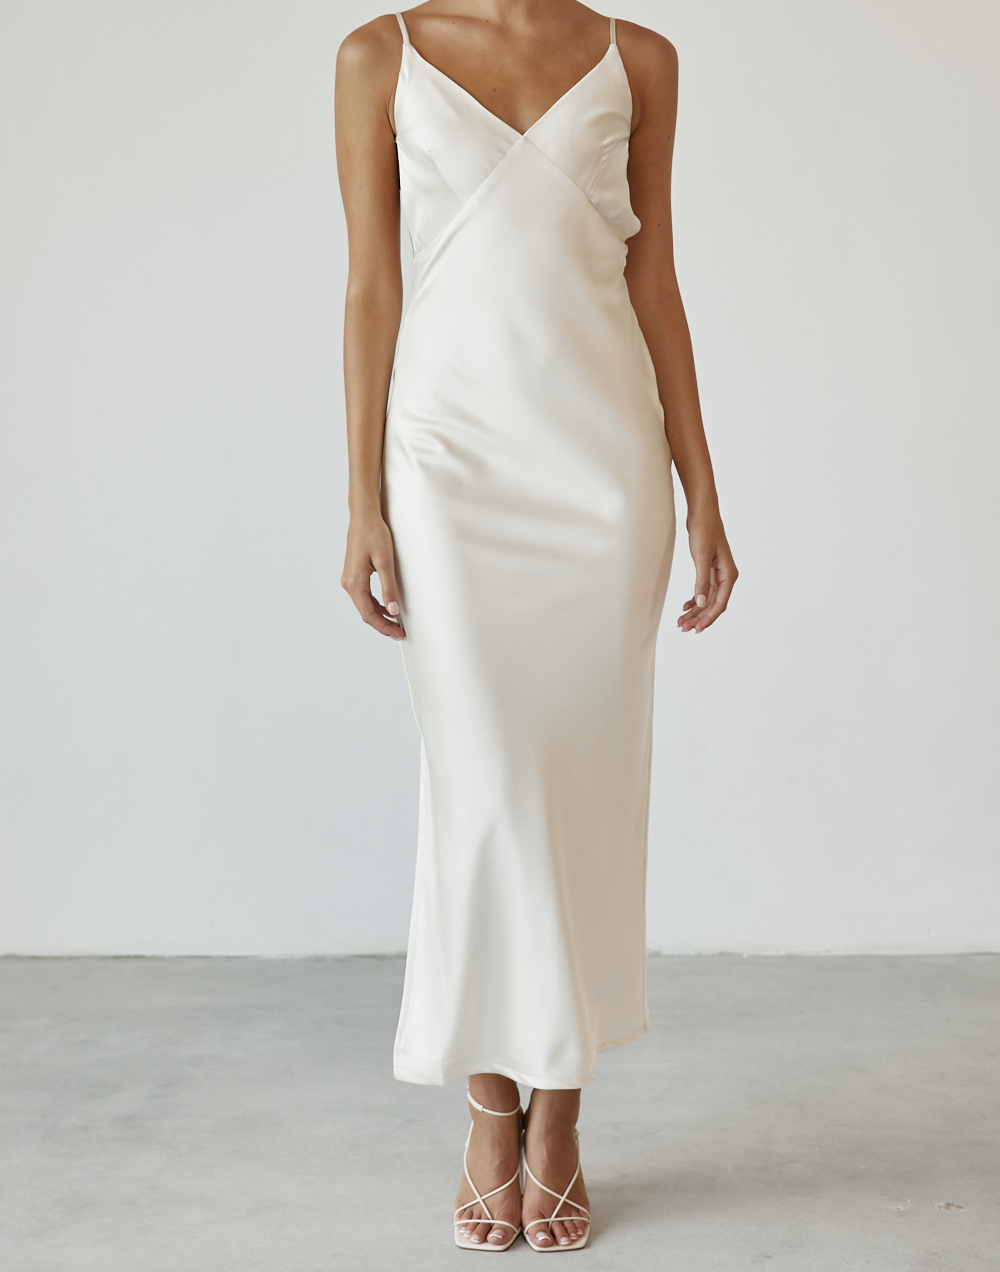 Captivate Maxi Dress (Cream) - Backless Maxi Dress - Women's Dress - Charcoal Clothing